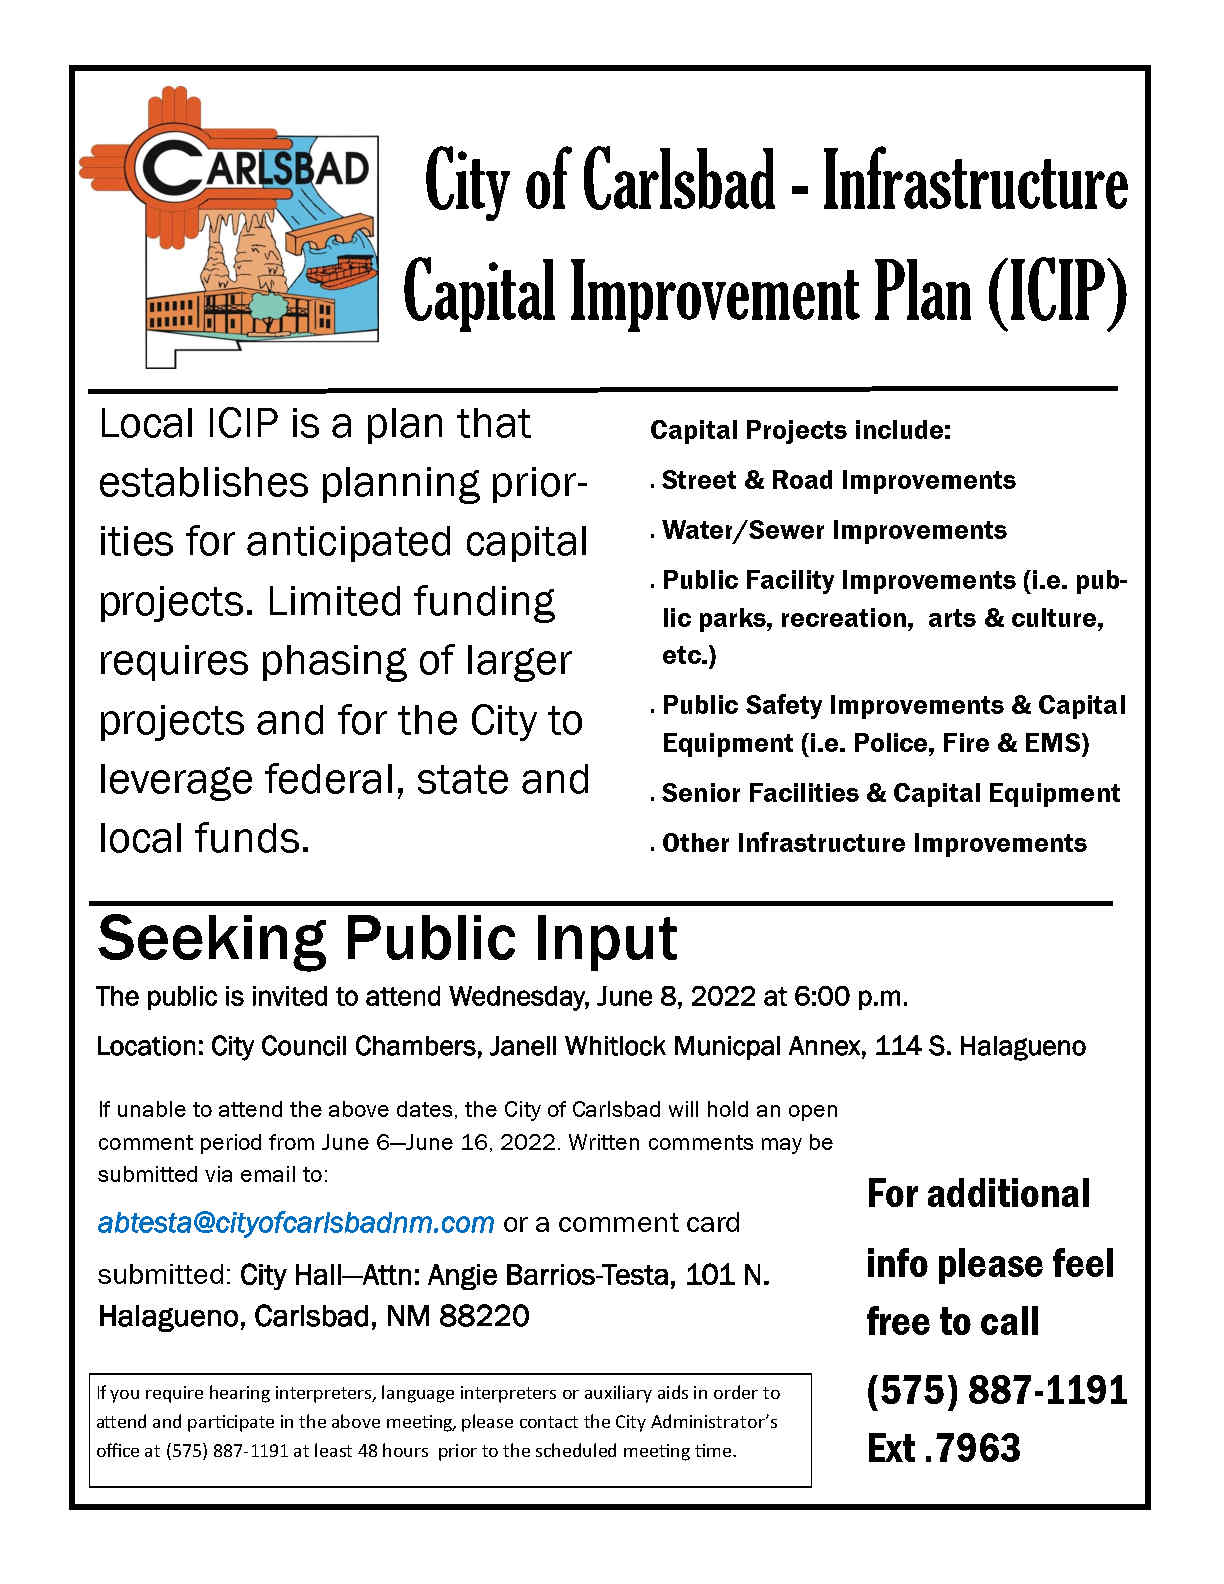 ICIP Flyer Info Image